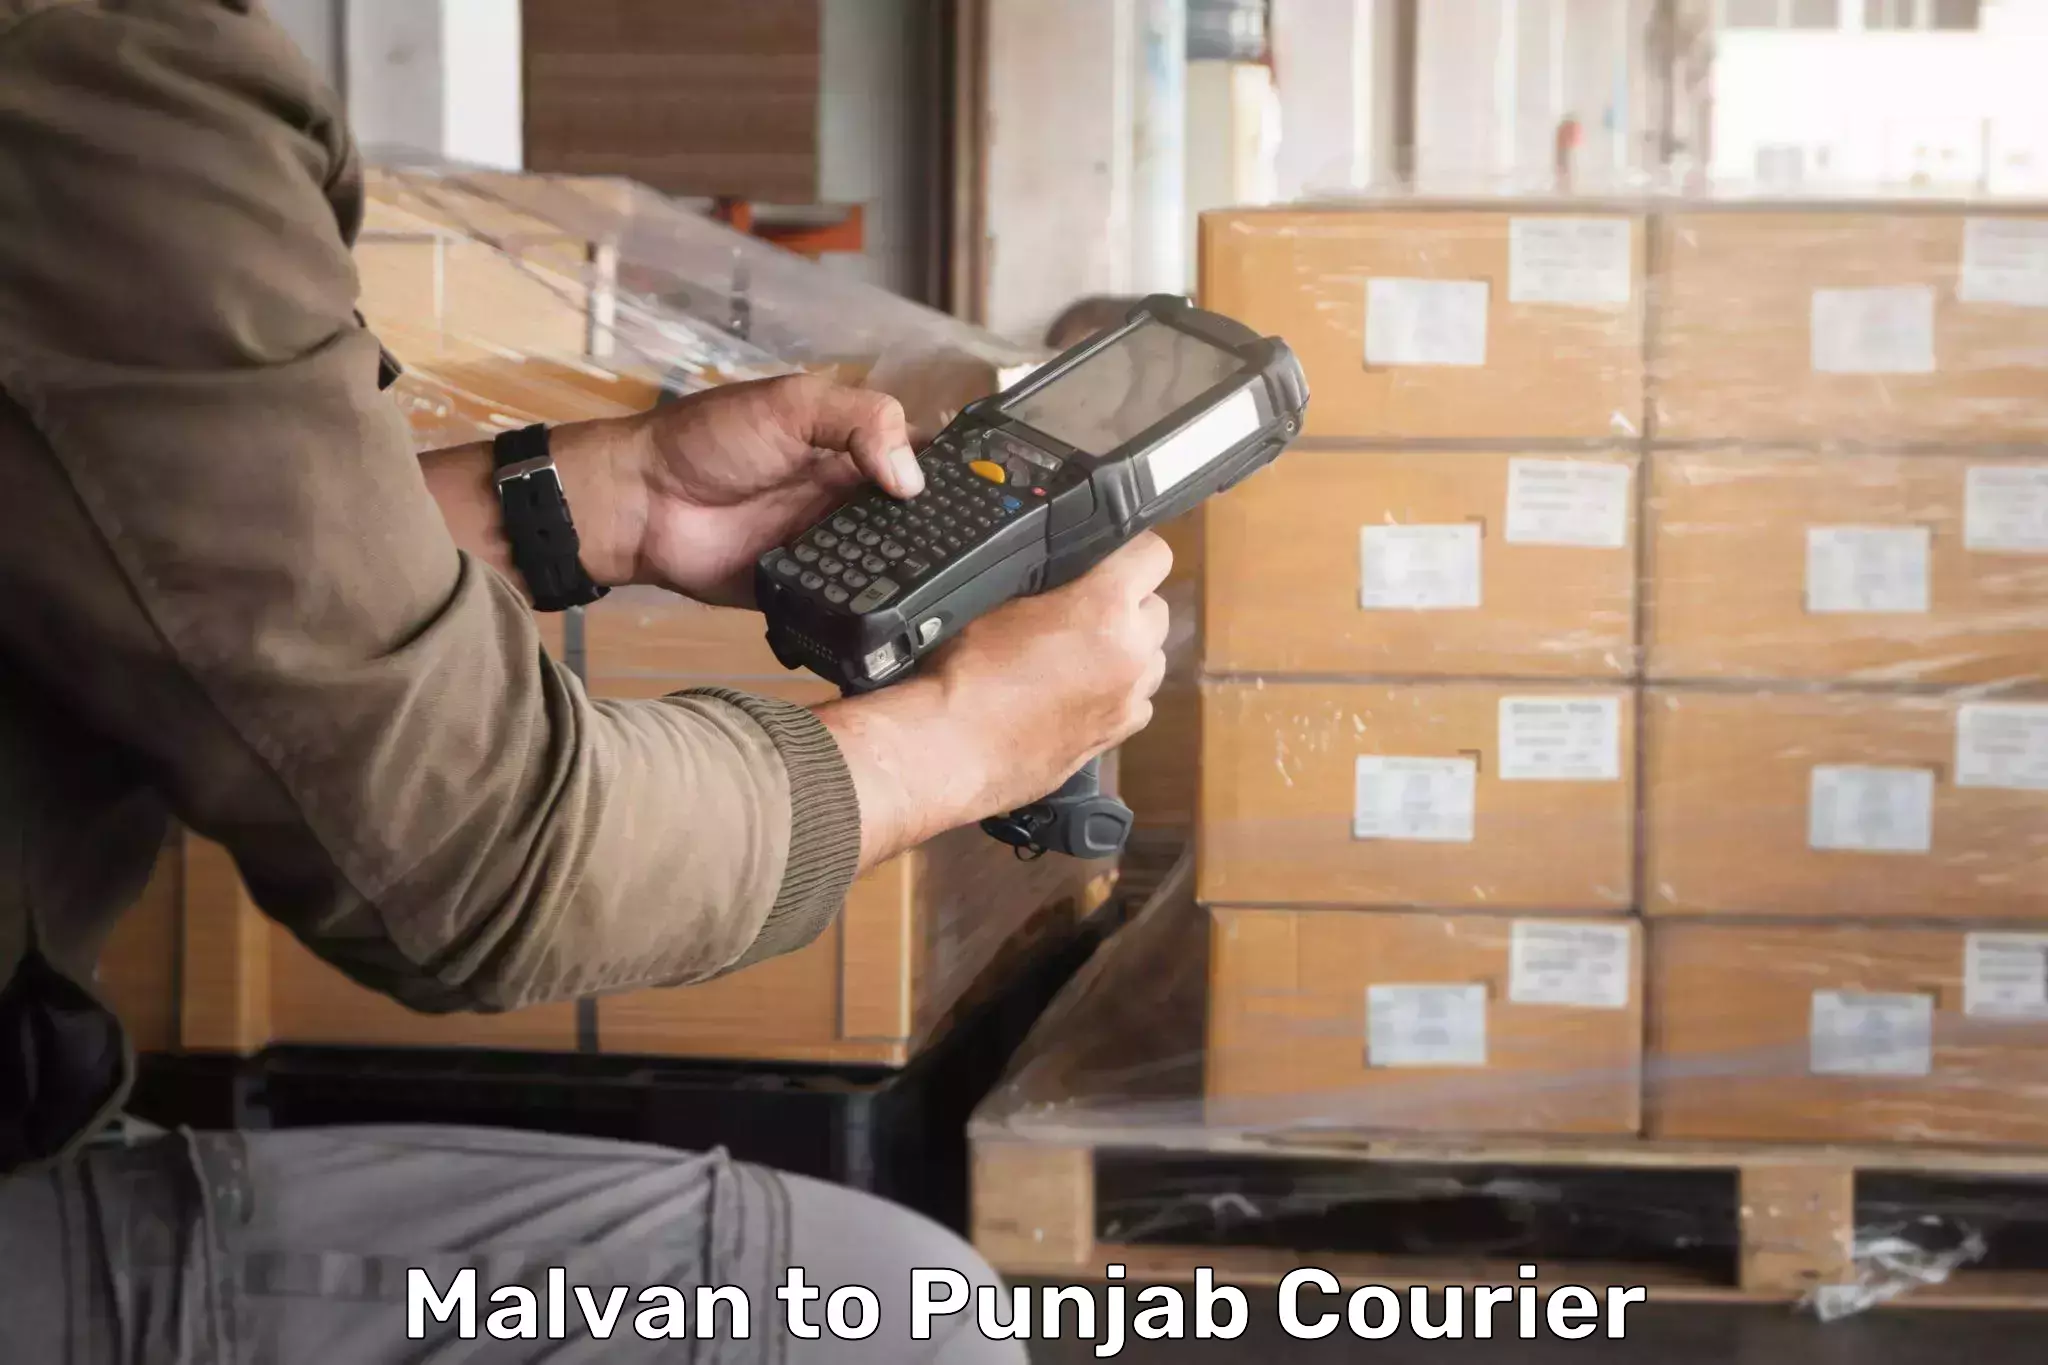 Pharmaceutical courier Malvan to Abohar